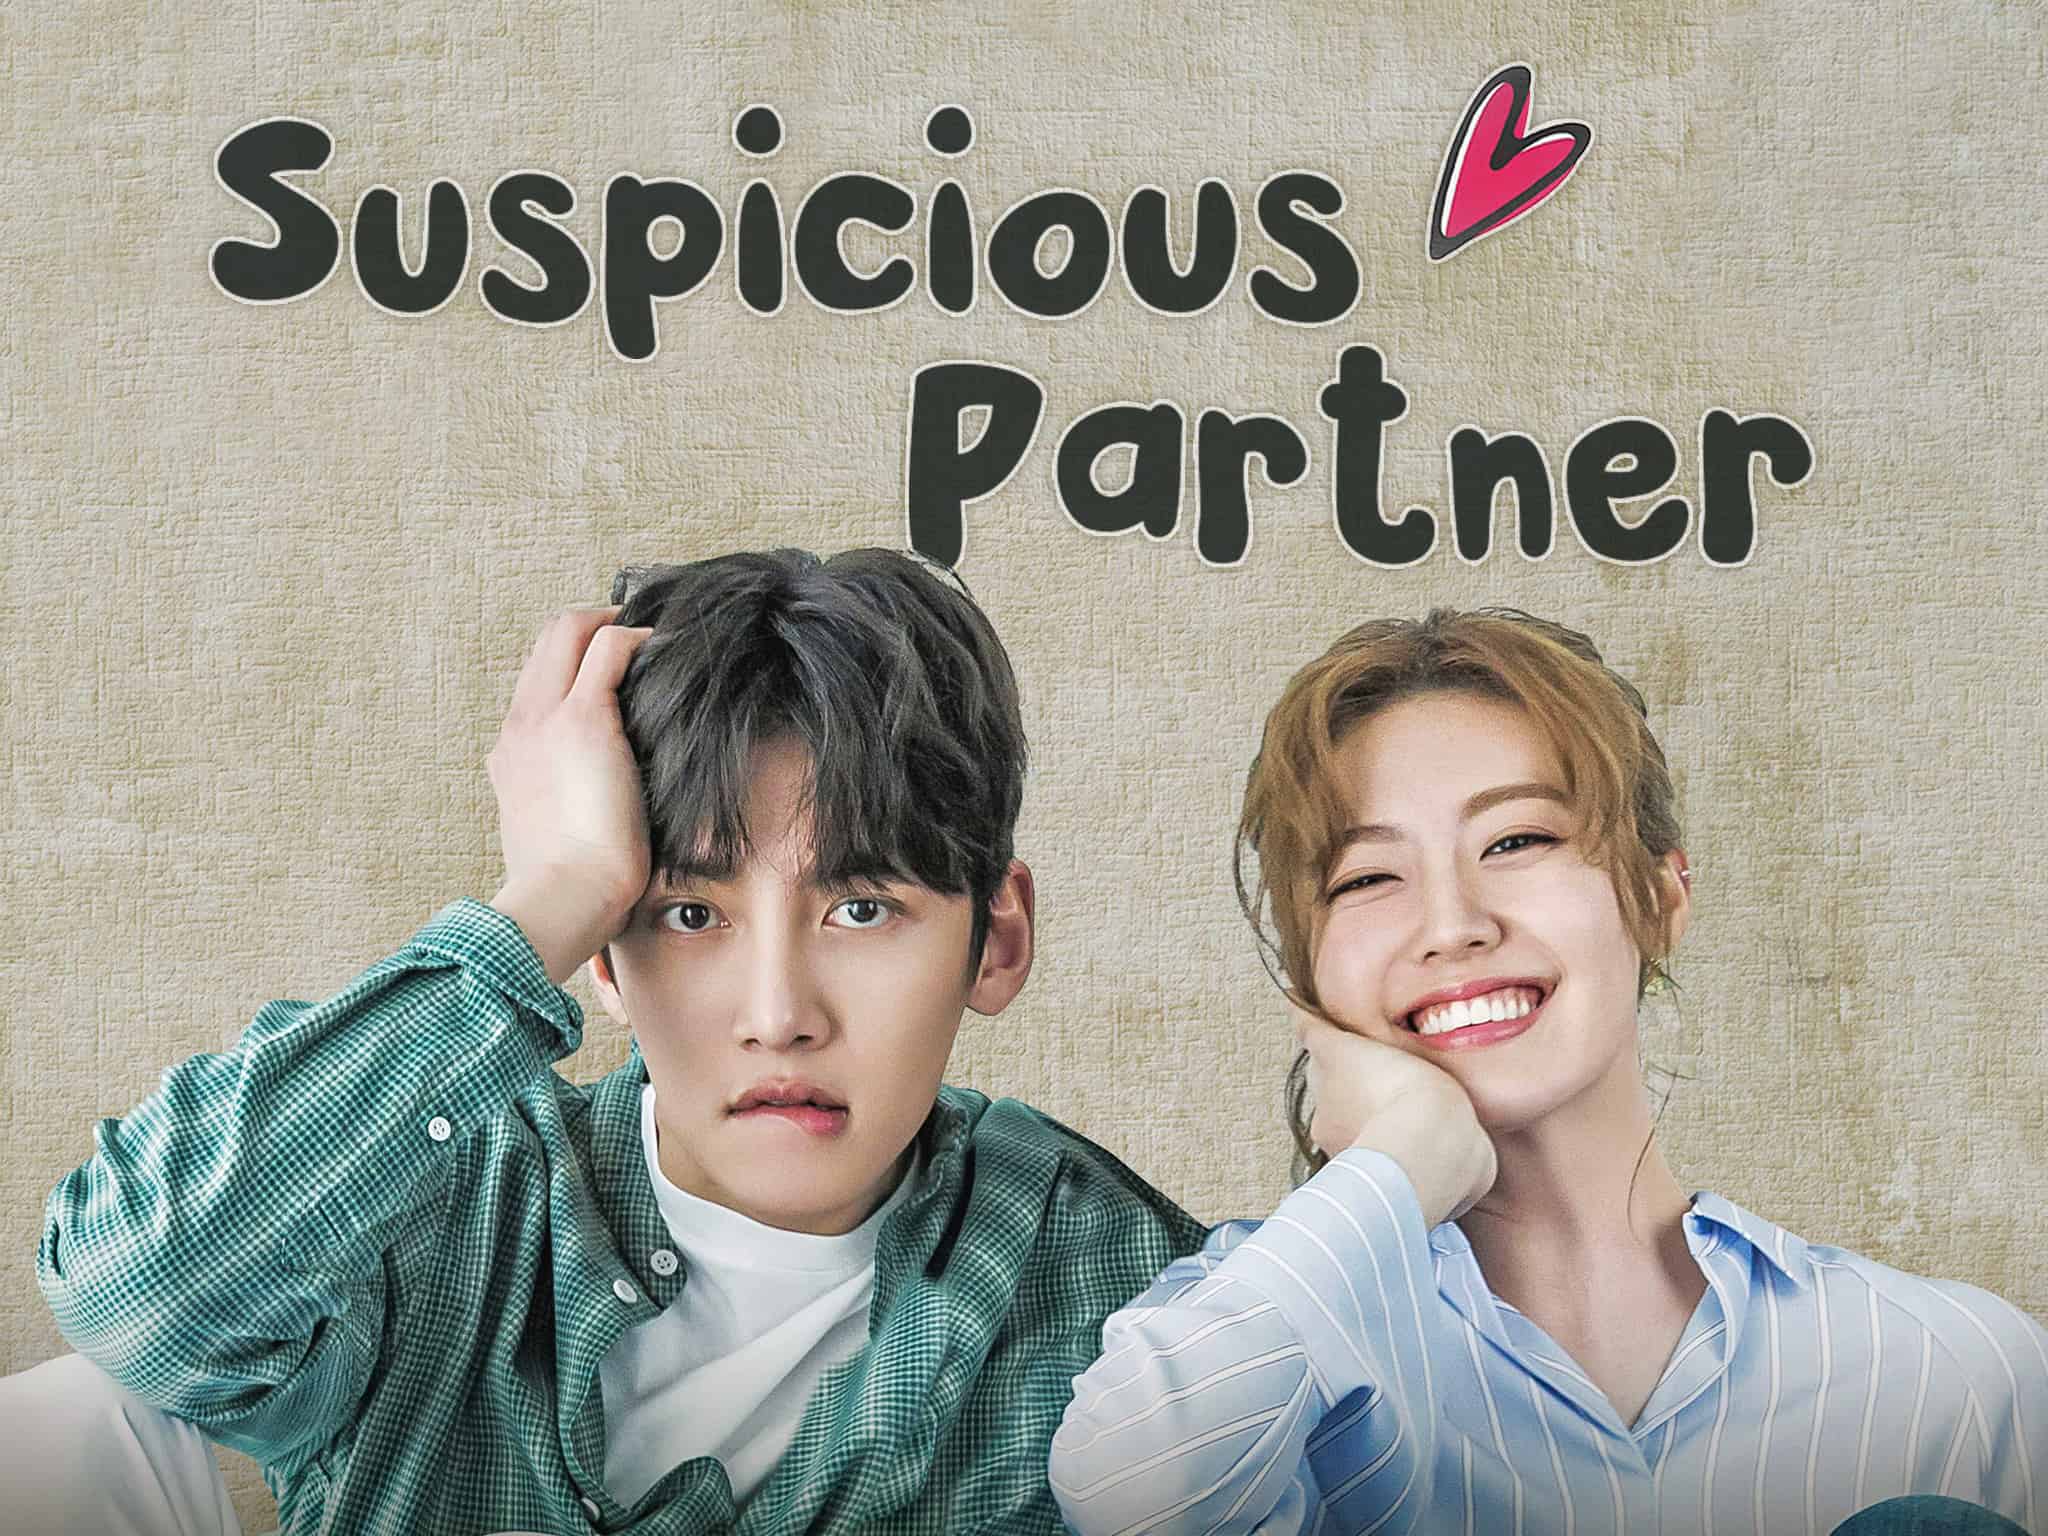 poster of suspicious partner